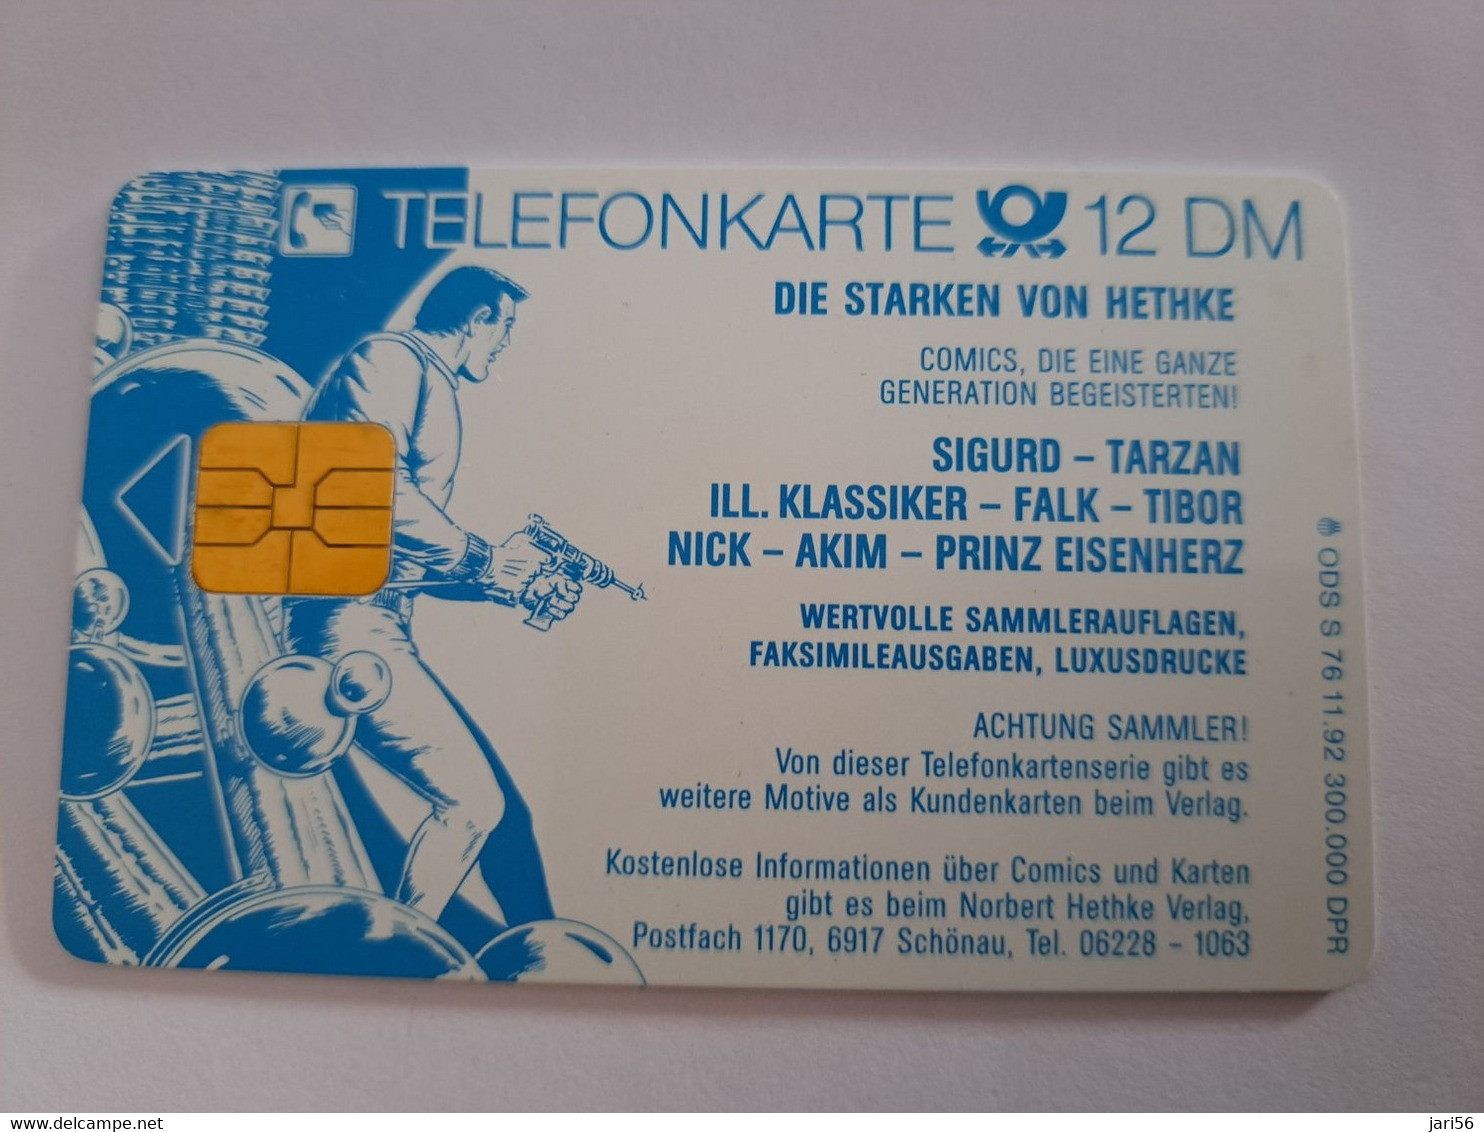 DUITSLAND/ GERMANY  CHIPCARD /COMIC/MARVEL SUPERHEROES /NICK  / 12DM  CARD / S76 MINT  CARD     **10650** - S-Series: Schalterserie Mit Fremdfirmenreklame